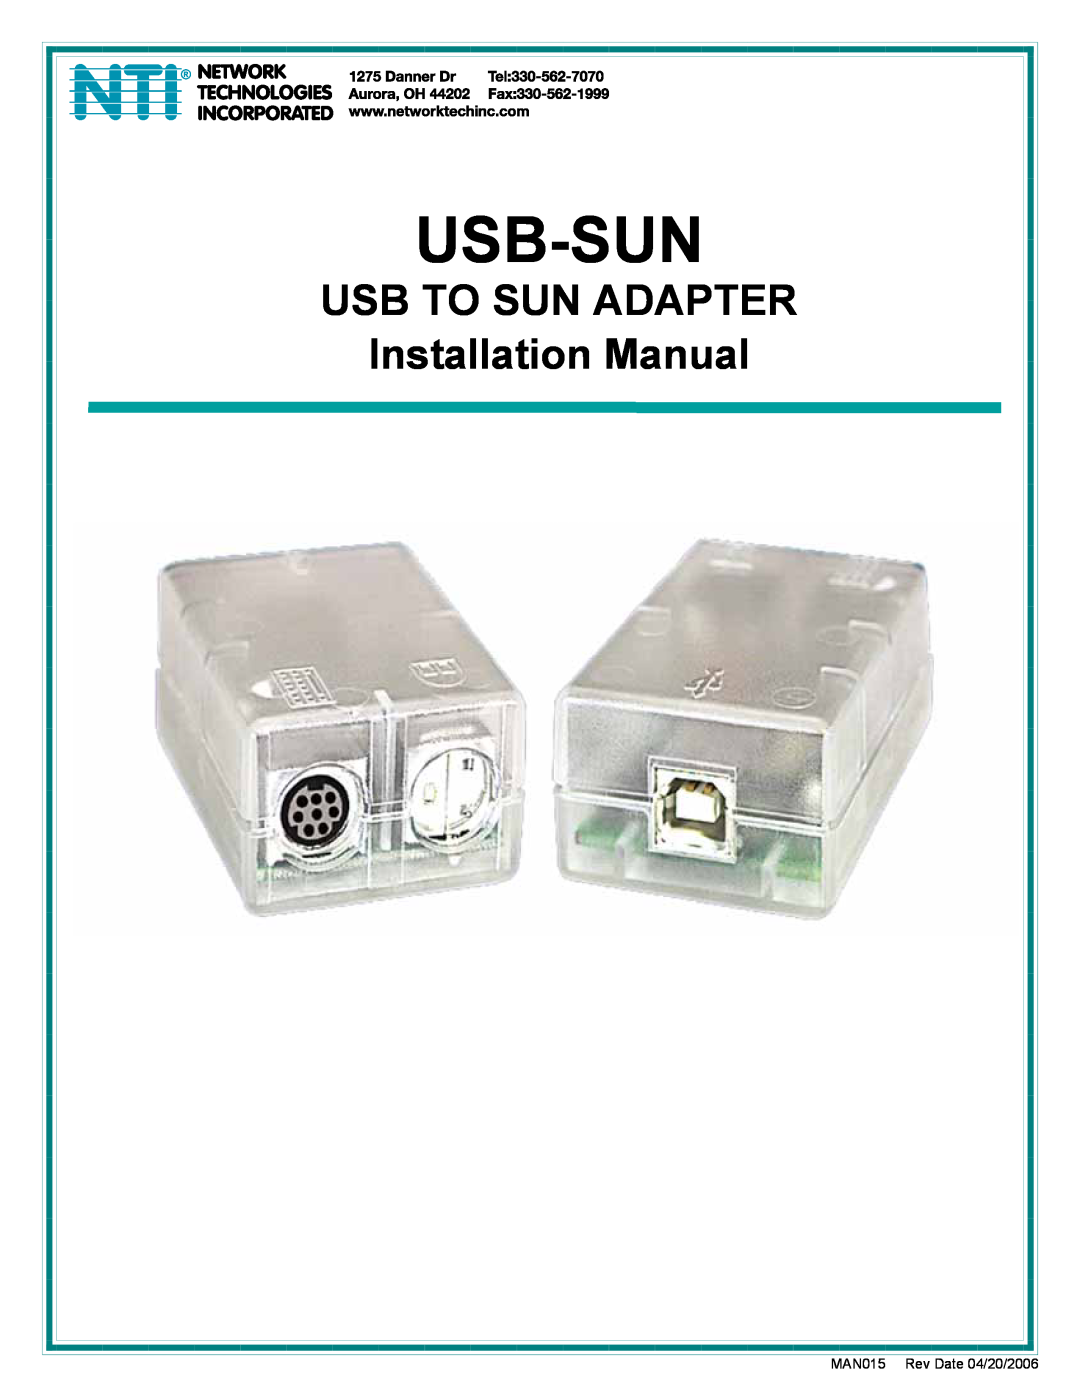 Network Technologies MAN015 installation manual Usb-Sun, Usb To Sun Adapter, Installation Manual 